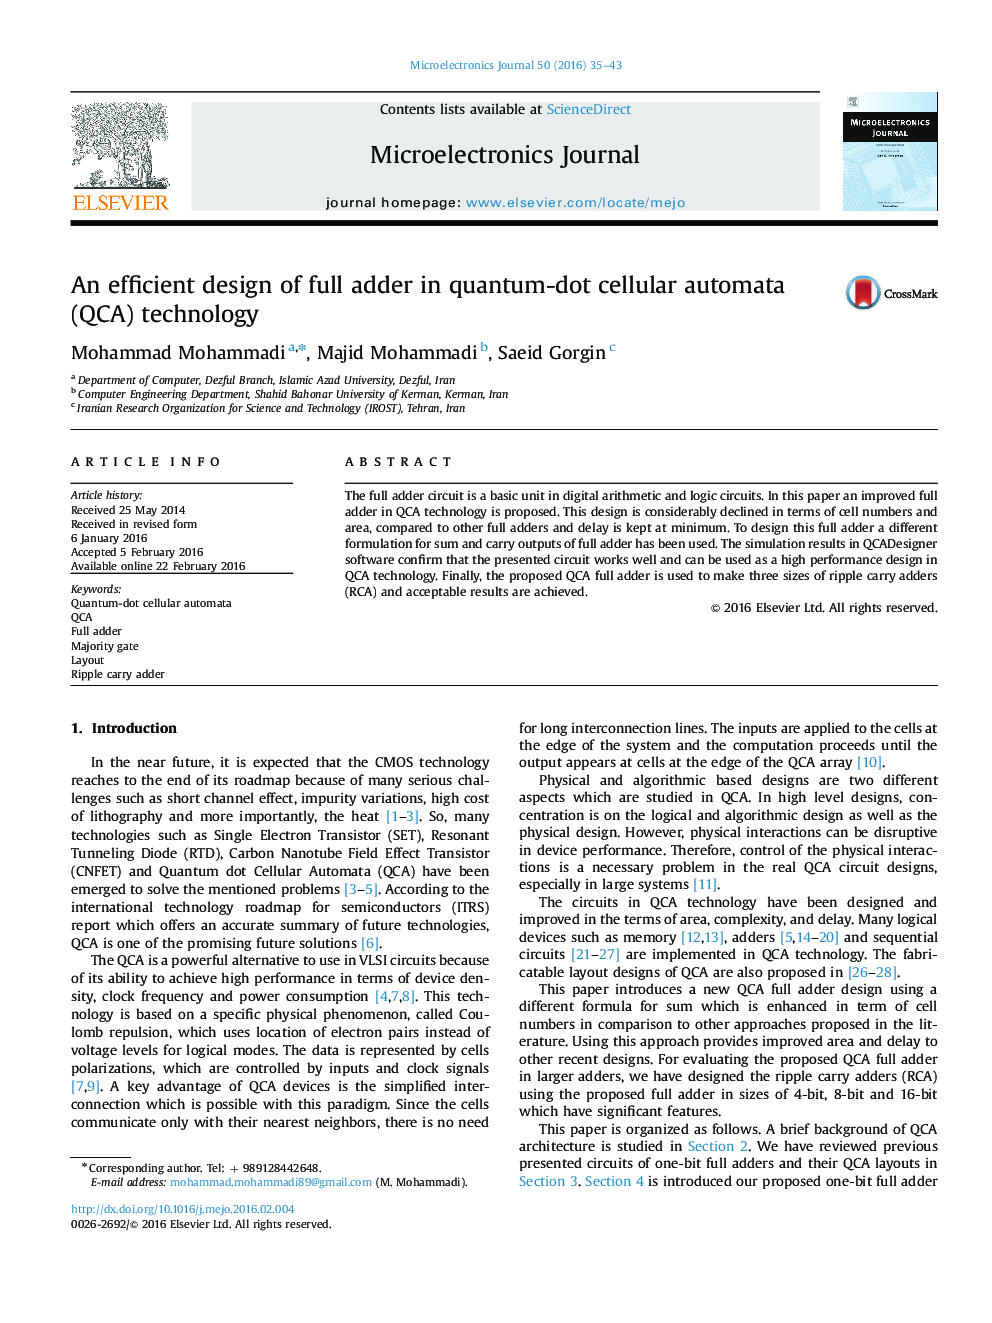 An efficient design of full adder in quantum-dot cellular automata (QCA) technology